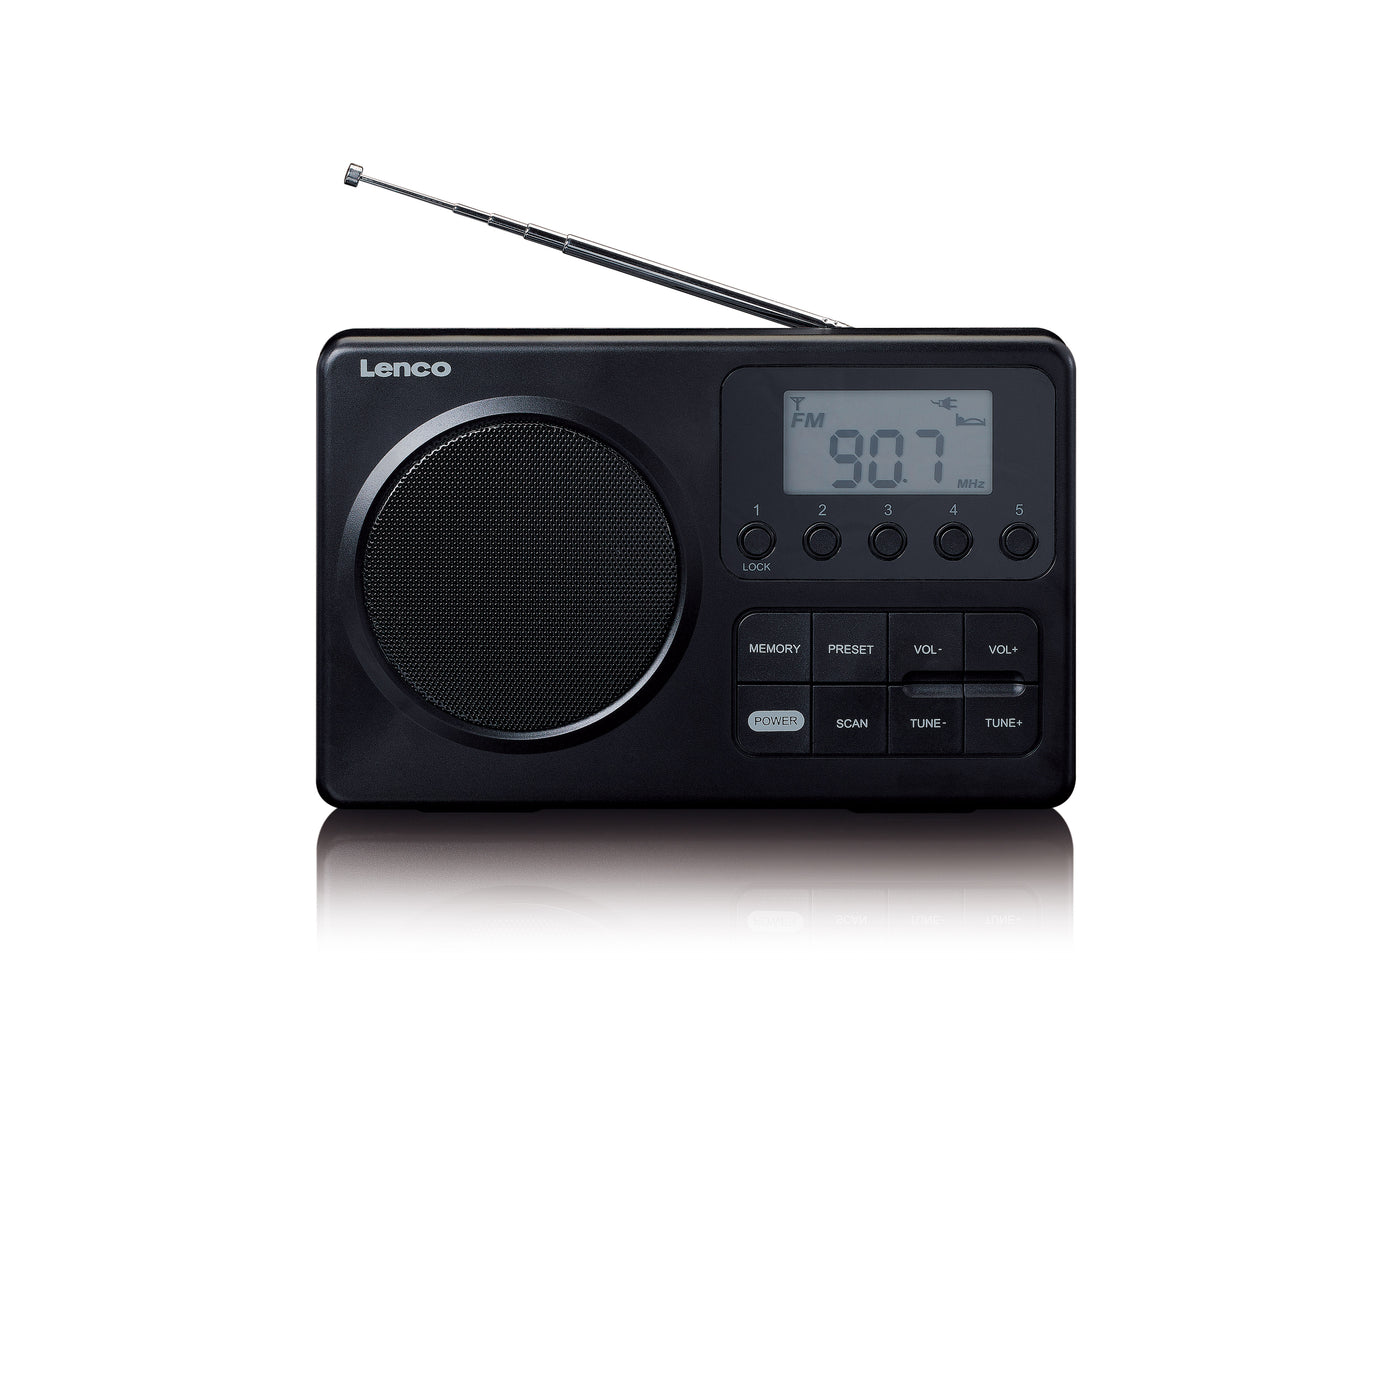 LENCO MPR-035BK - Compact portable FM radio with LCD display - Black